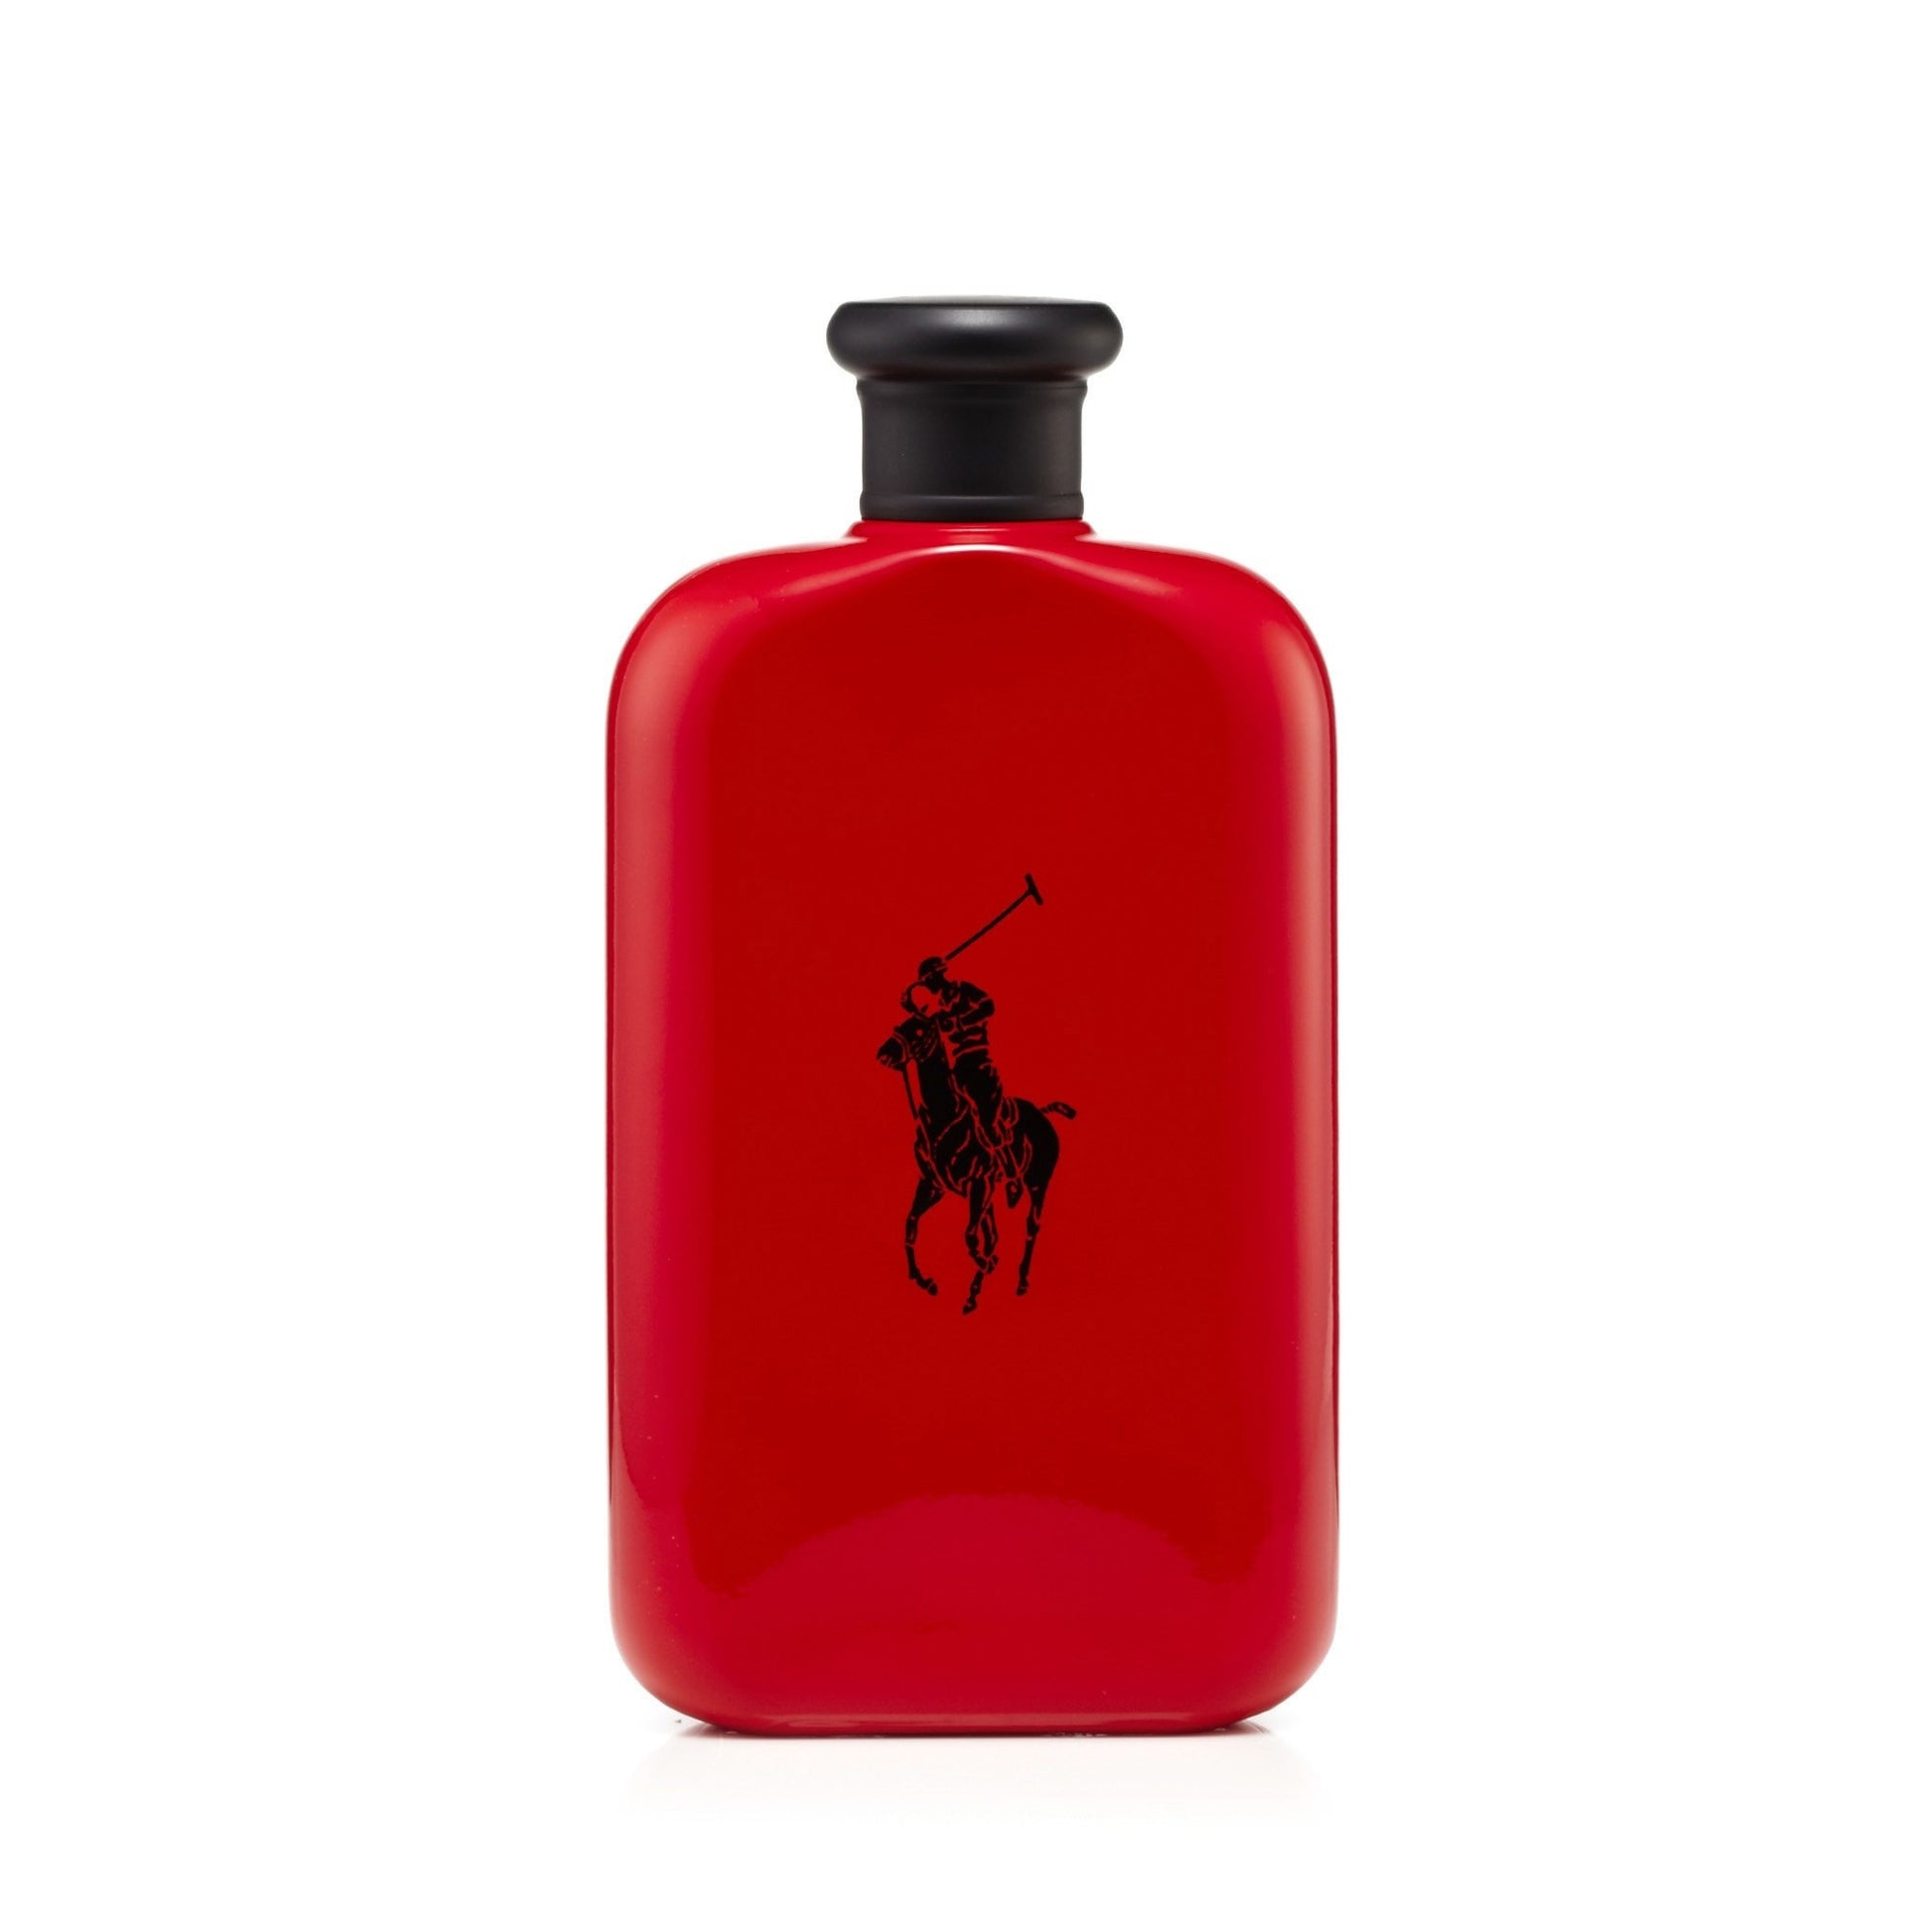 Ralph Lauren Polo Red Eau de Toilette Mens Spray 6.7 oz.  Click to open in modal